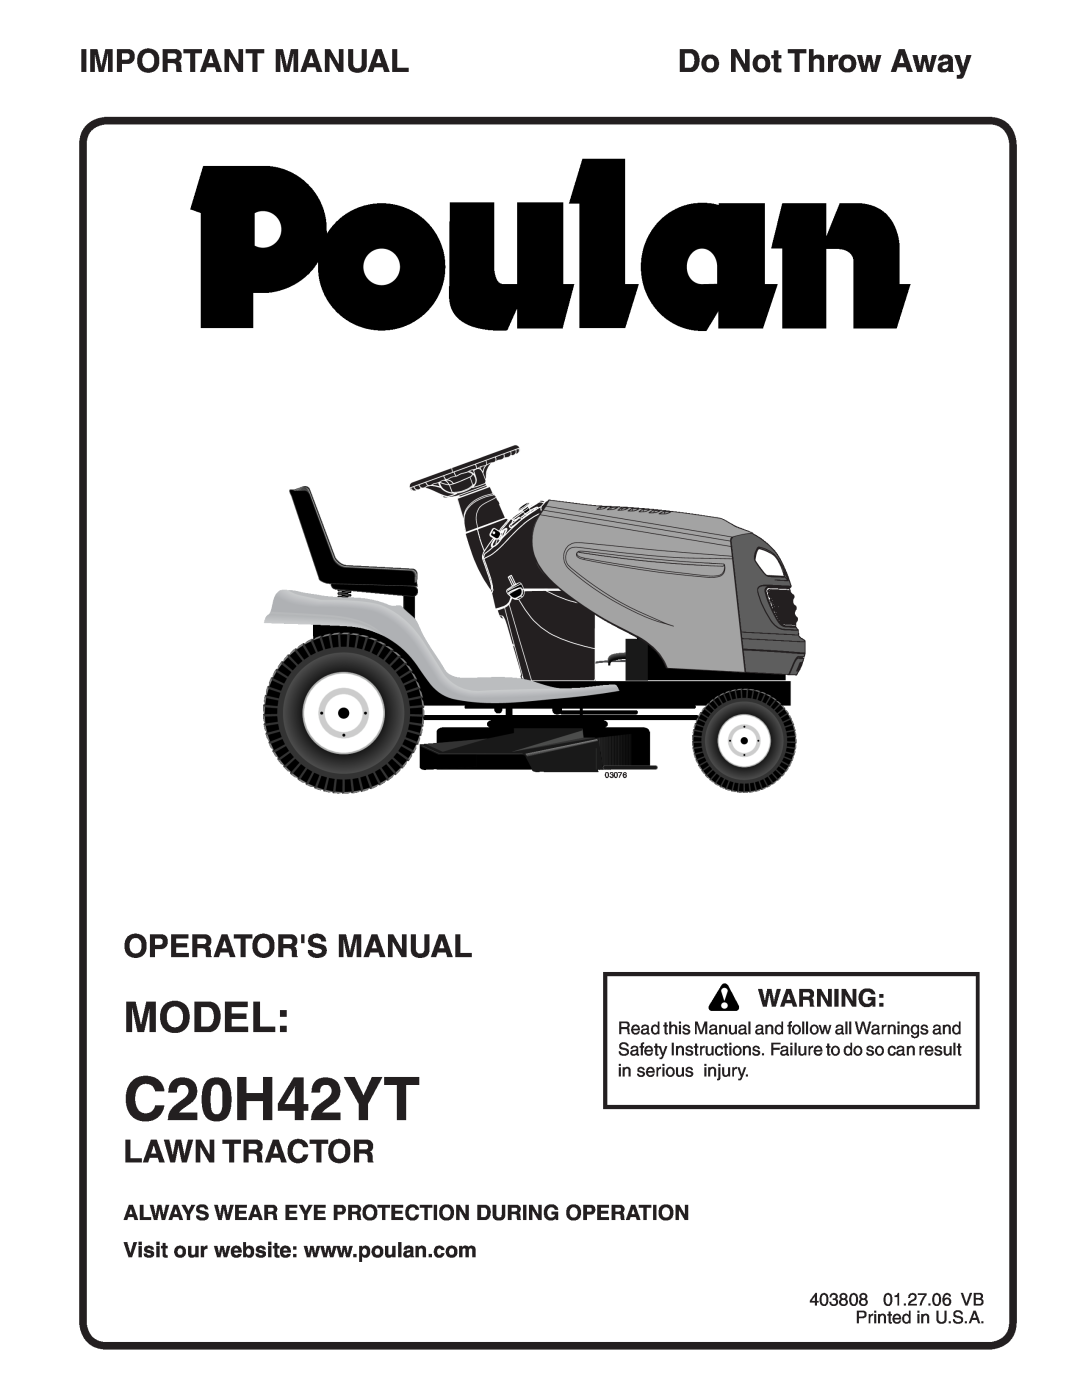 Poulan C20H42YT manual Model, Important Manual, Operators Manual, Lawn Tractor, Do Not Throw Away, 03076 